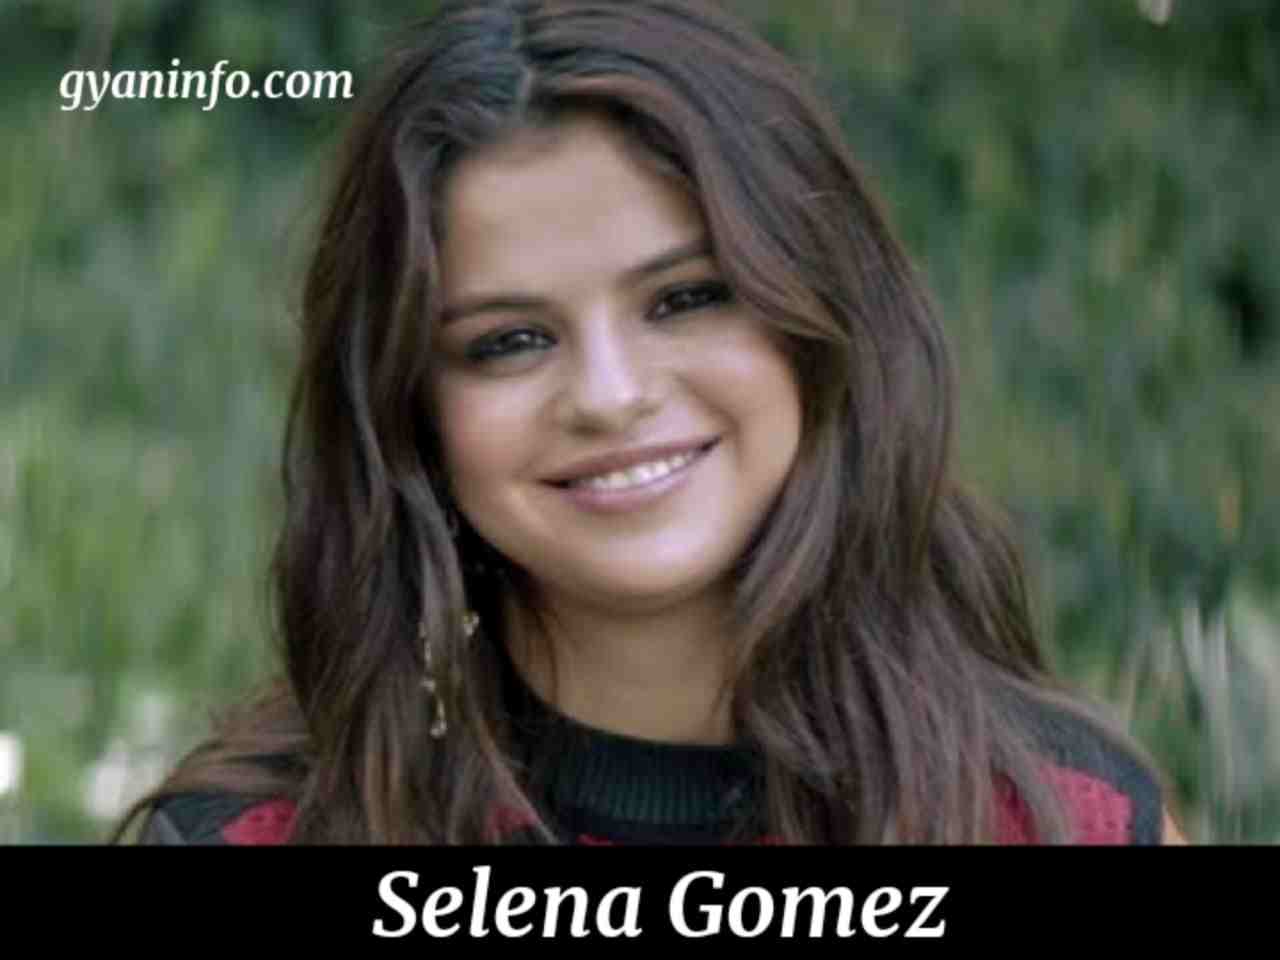 Selena Gomez [American Singer] Biography, Height, Age, Weight, Body Measurements, Boyfriend, Wiki, Net Worth & More